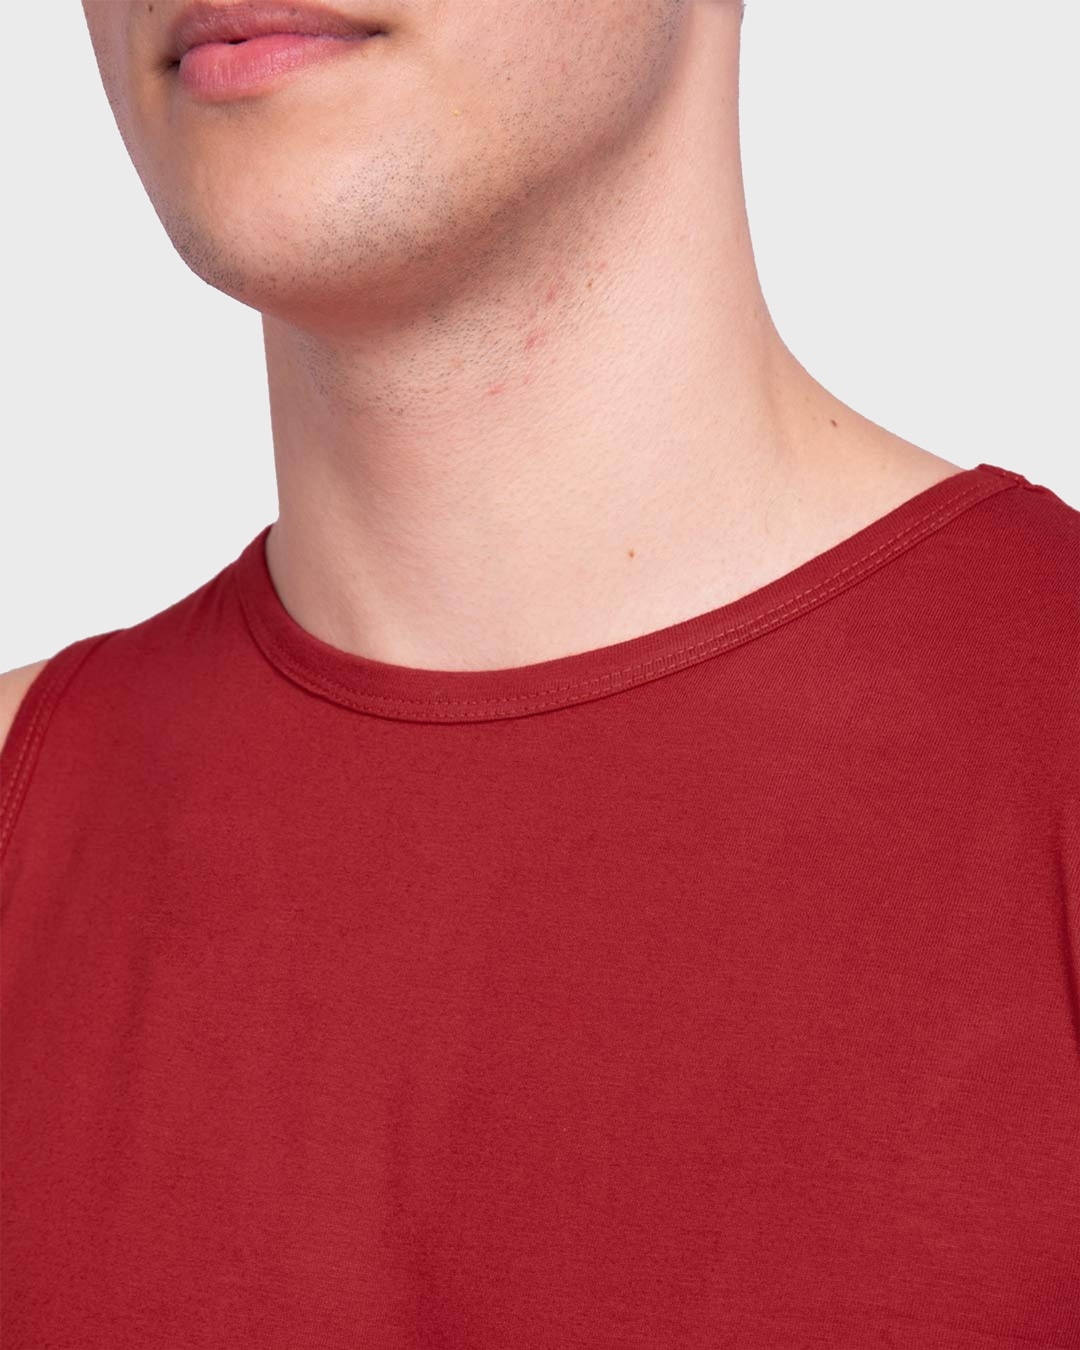 Shop Men's Round Neck Vest Pack of 2 (Red & Red)